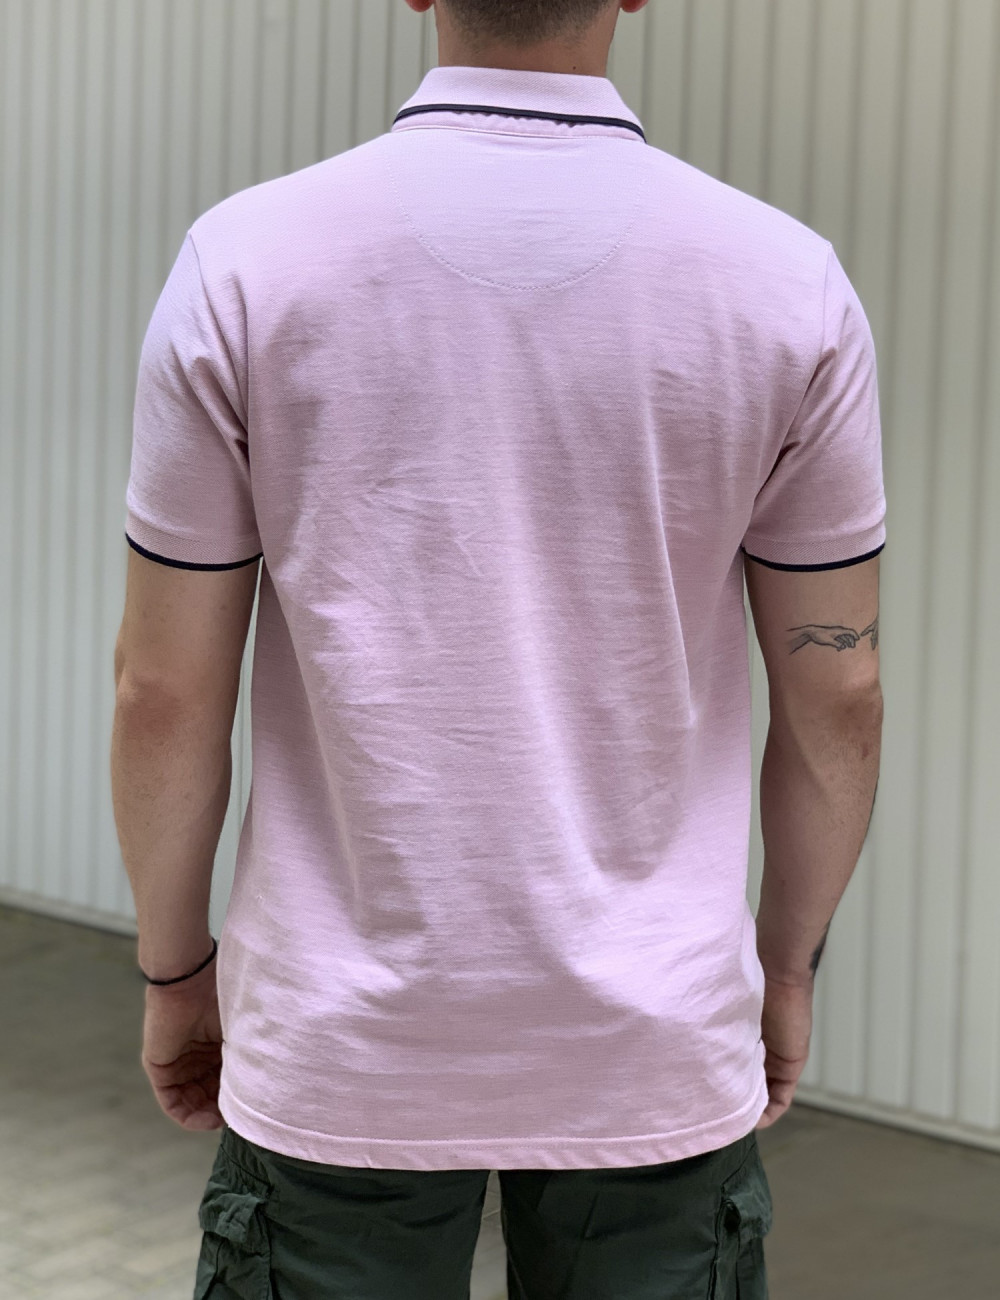 Everbest ανδρική ροζ Polo μπλούζα 212921